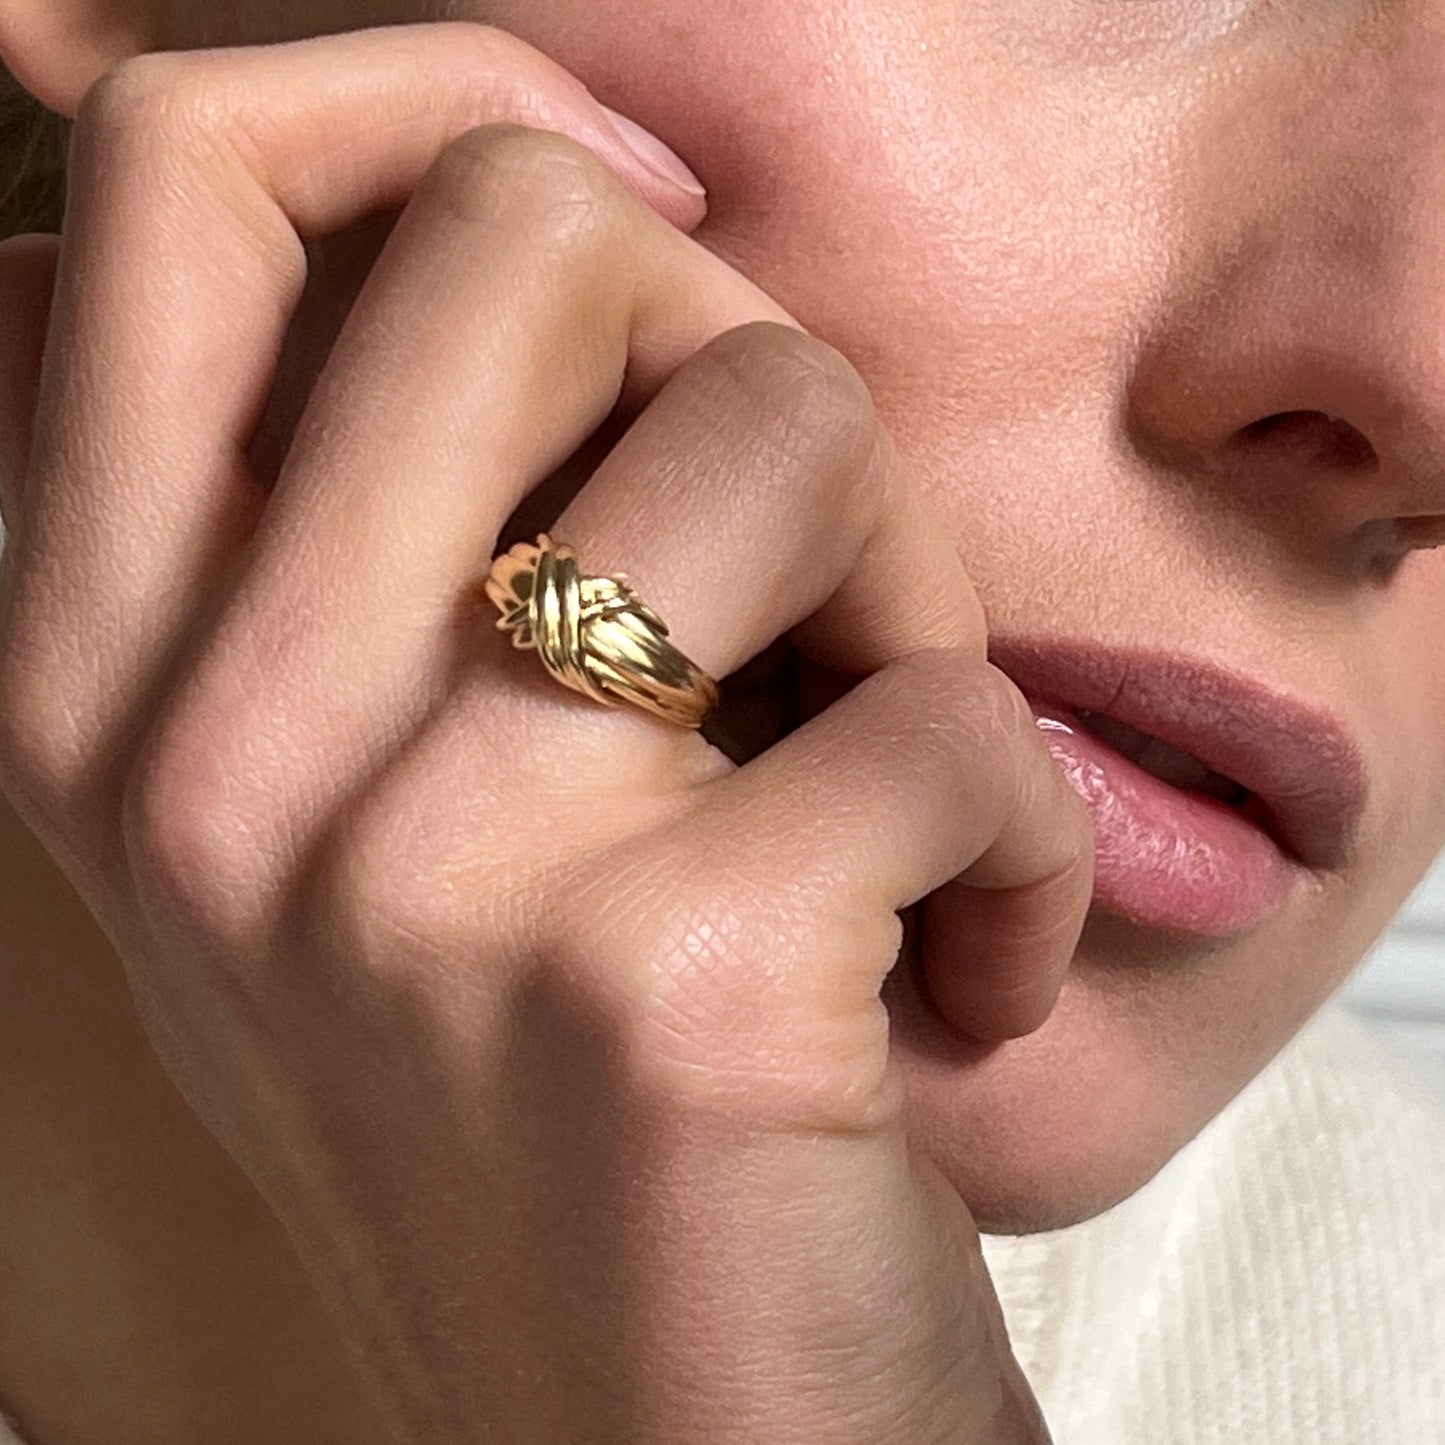 Tiffany & Co Signature ring